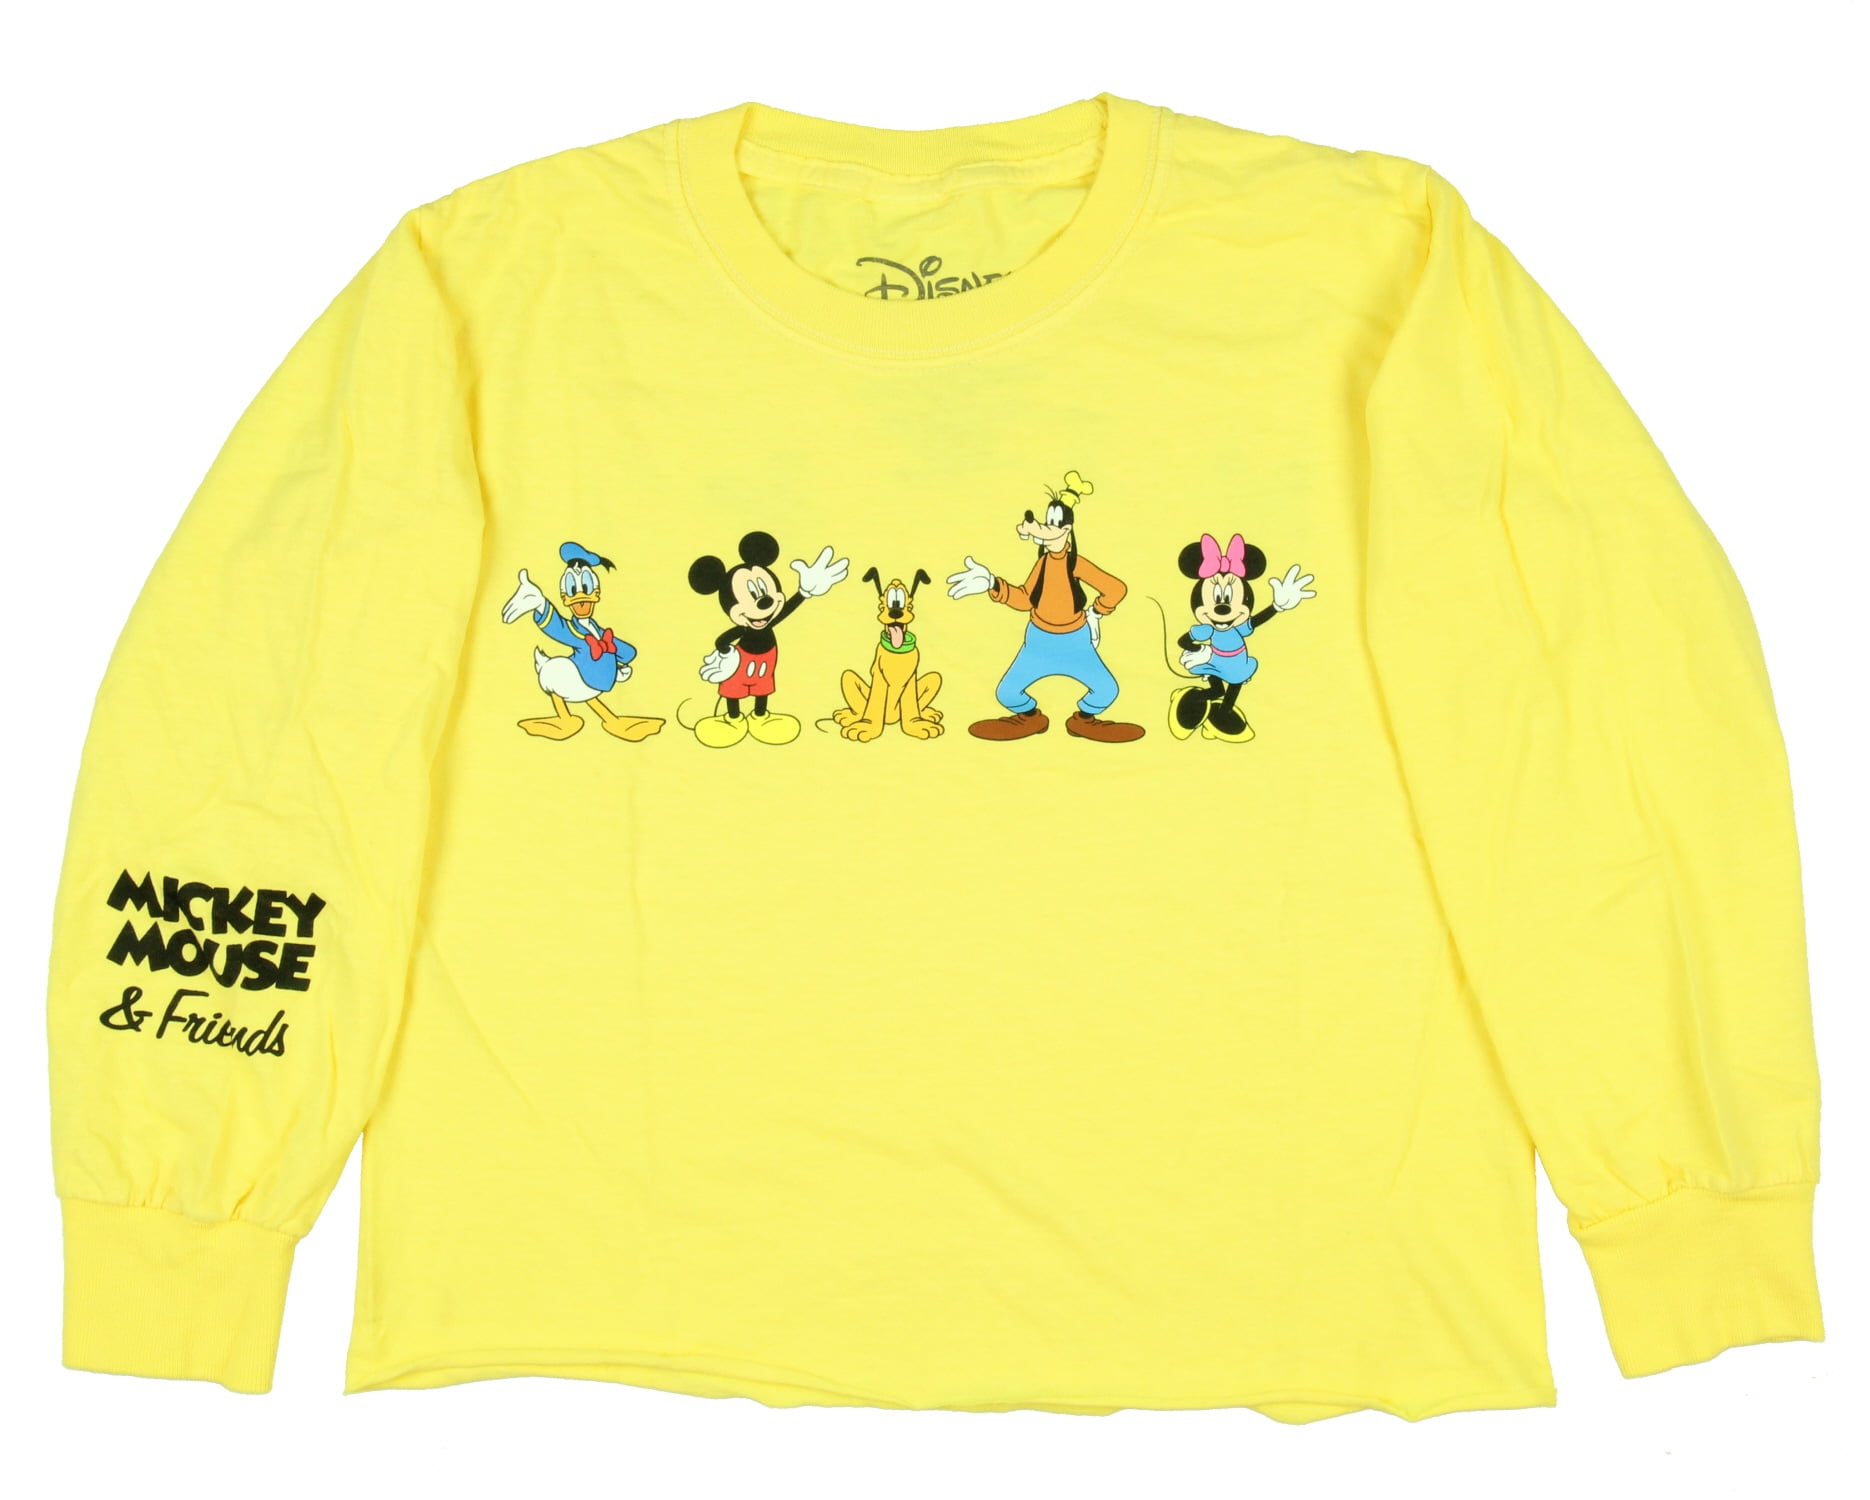 Disney Women's Mickey Mouse Crop Top Long Sleeve Shirt SZ Jr Junior L 11 13 1334 